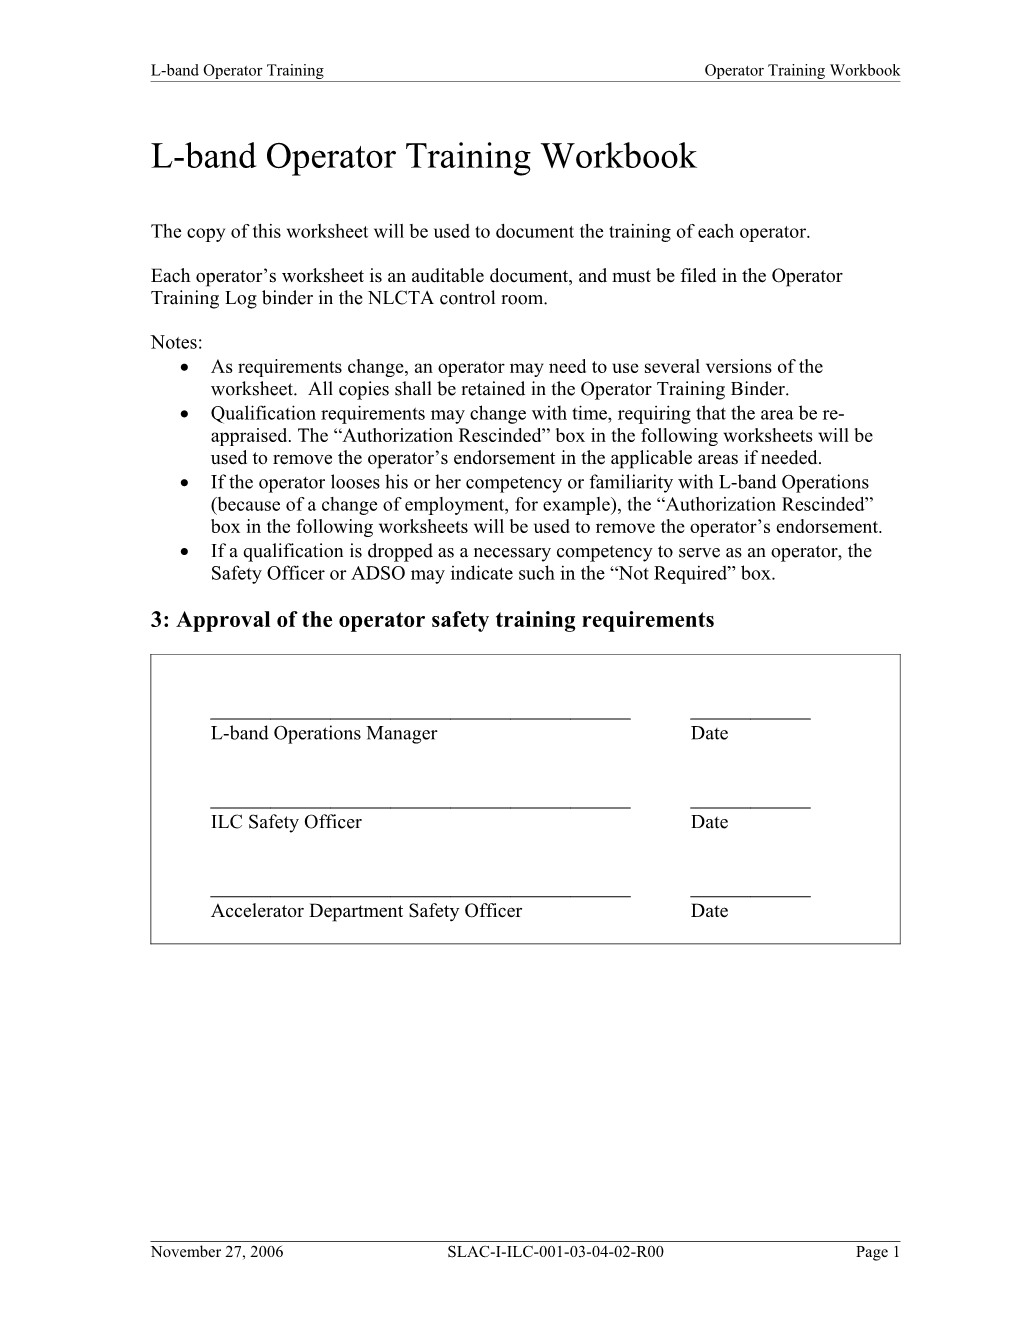 L-Band Operator Training Workbook